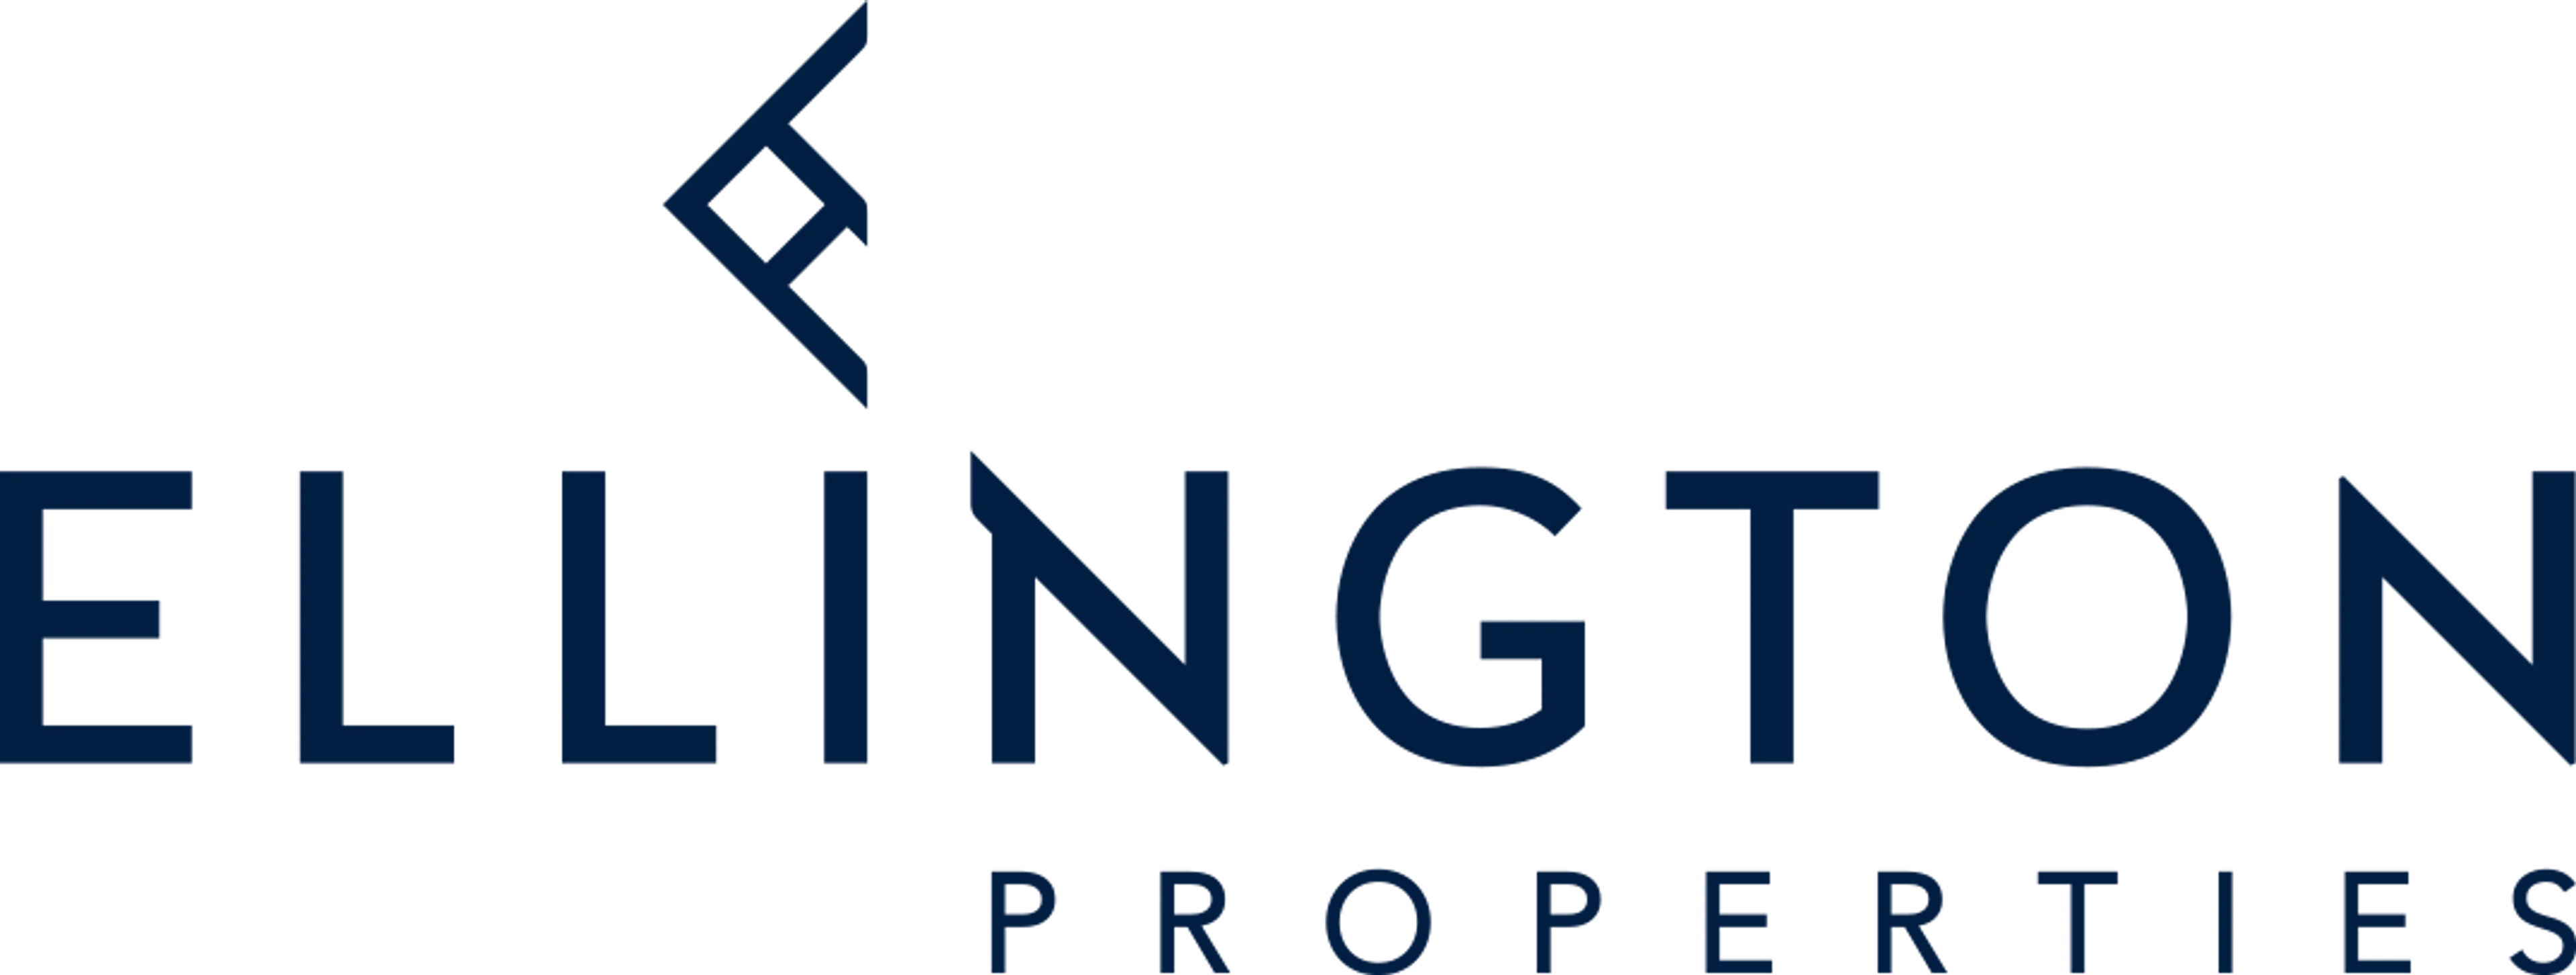 Logo of the real estate developer "Ellington"